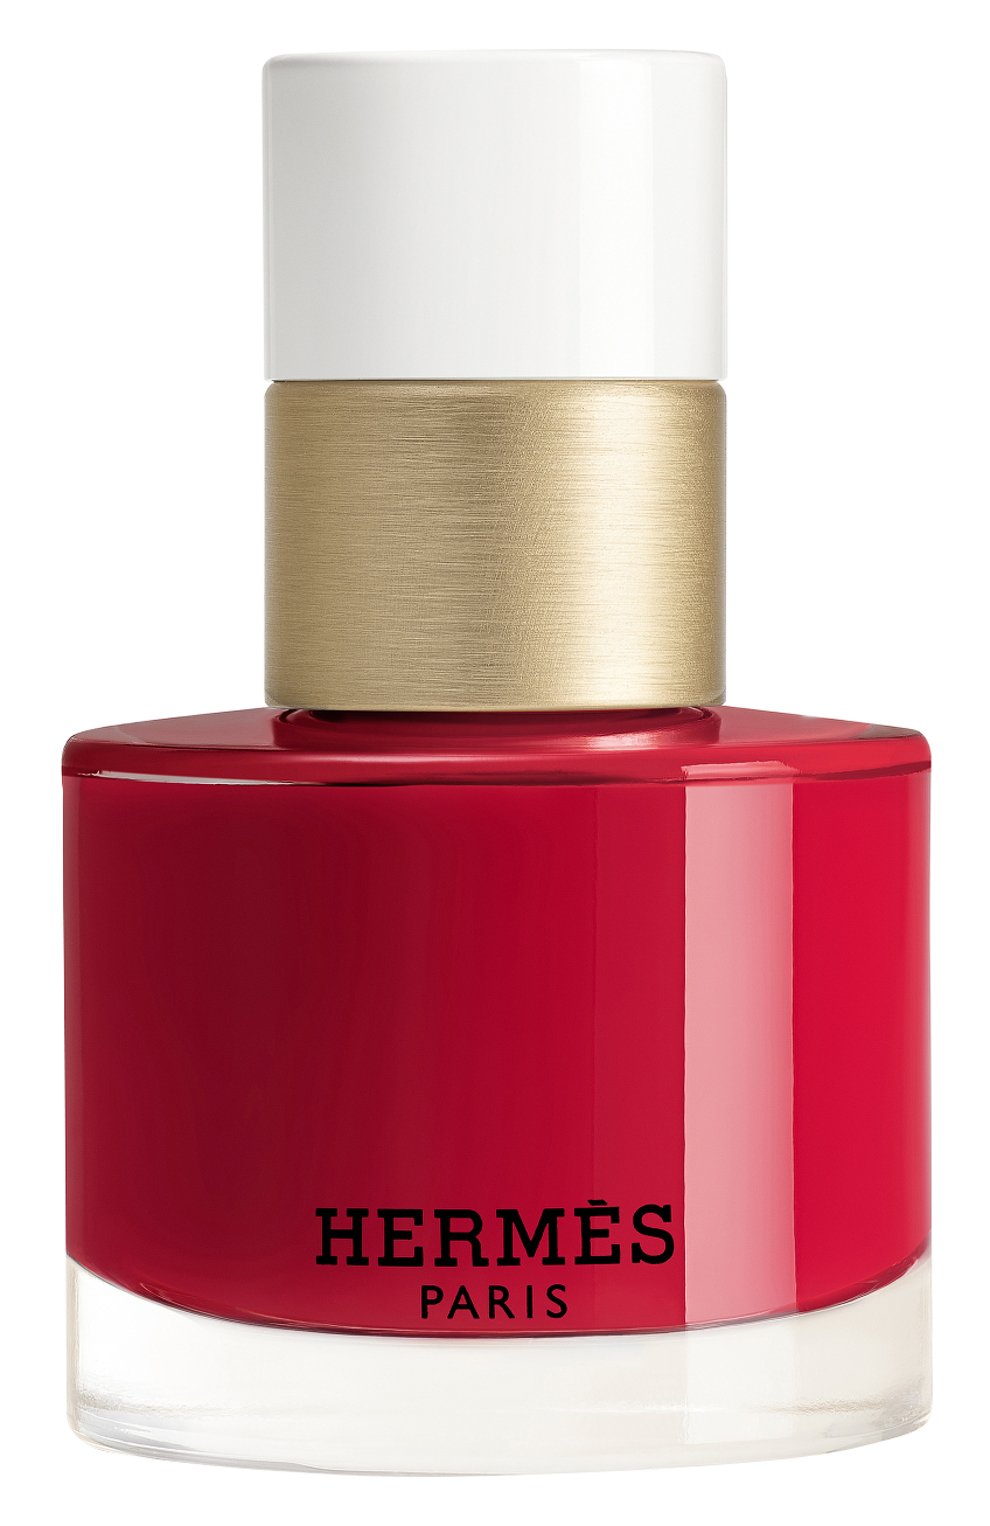 Лак для ногтей les mains hermès, rouge grenade (15ml) HERMÈS  цвета, арт. 60301VV077H | Фото 1 (Обьем косметики: 100ml)